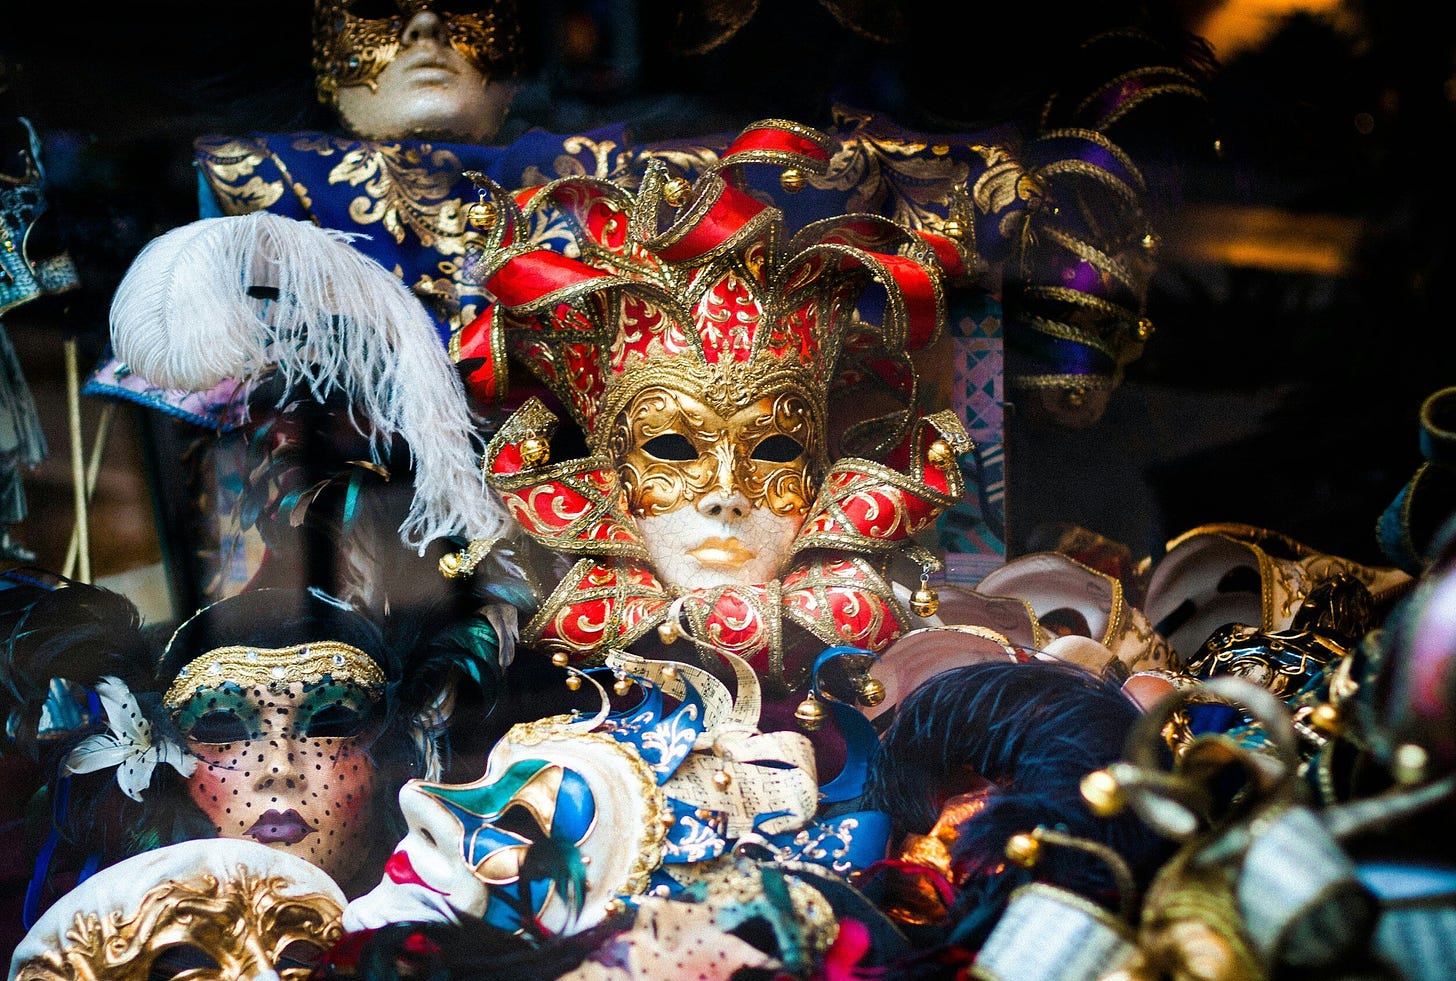 a display of Purim masks